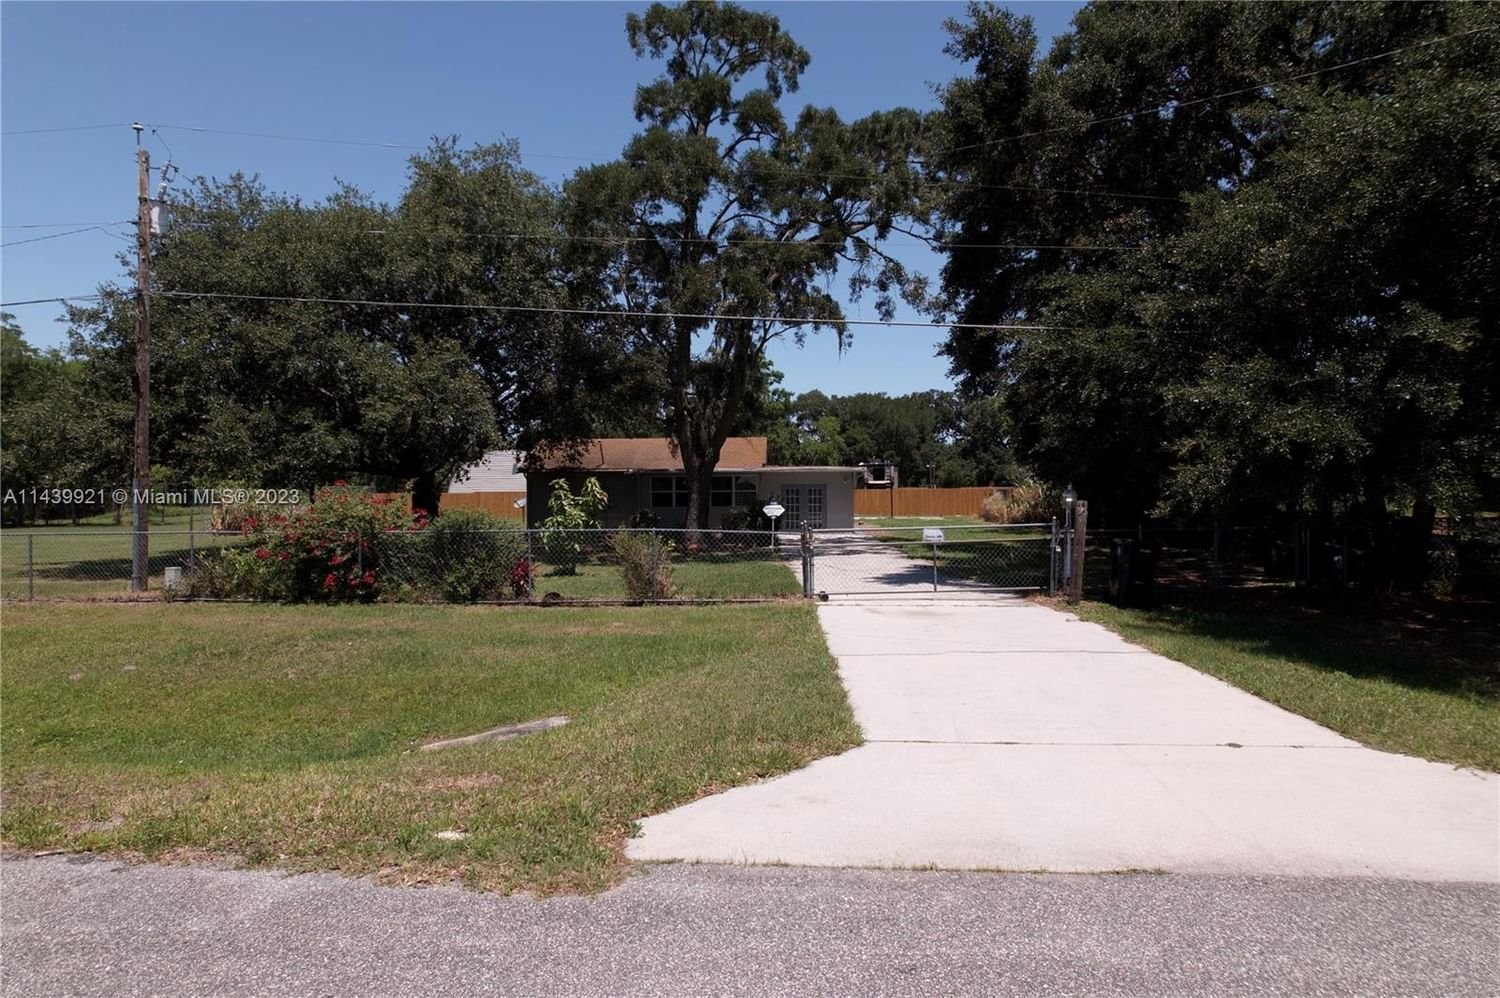 Real estate property located at 6301 Nassau Ave, Orange County, Orlando, FL